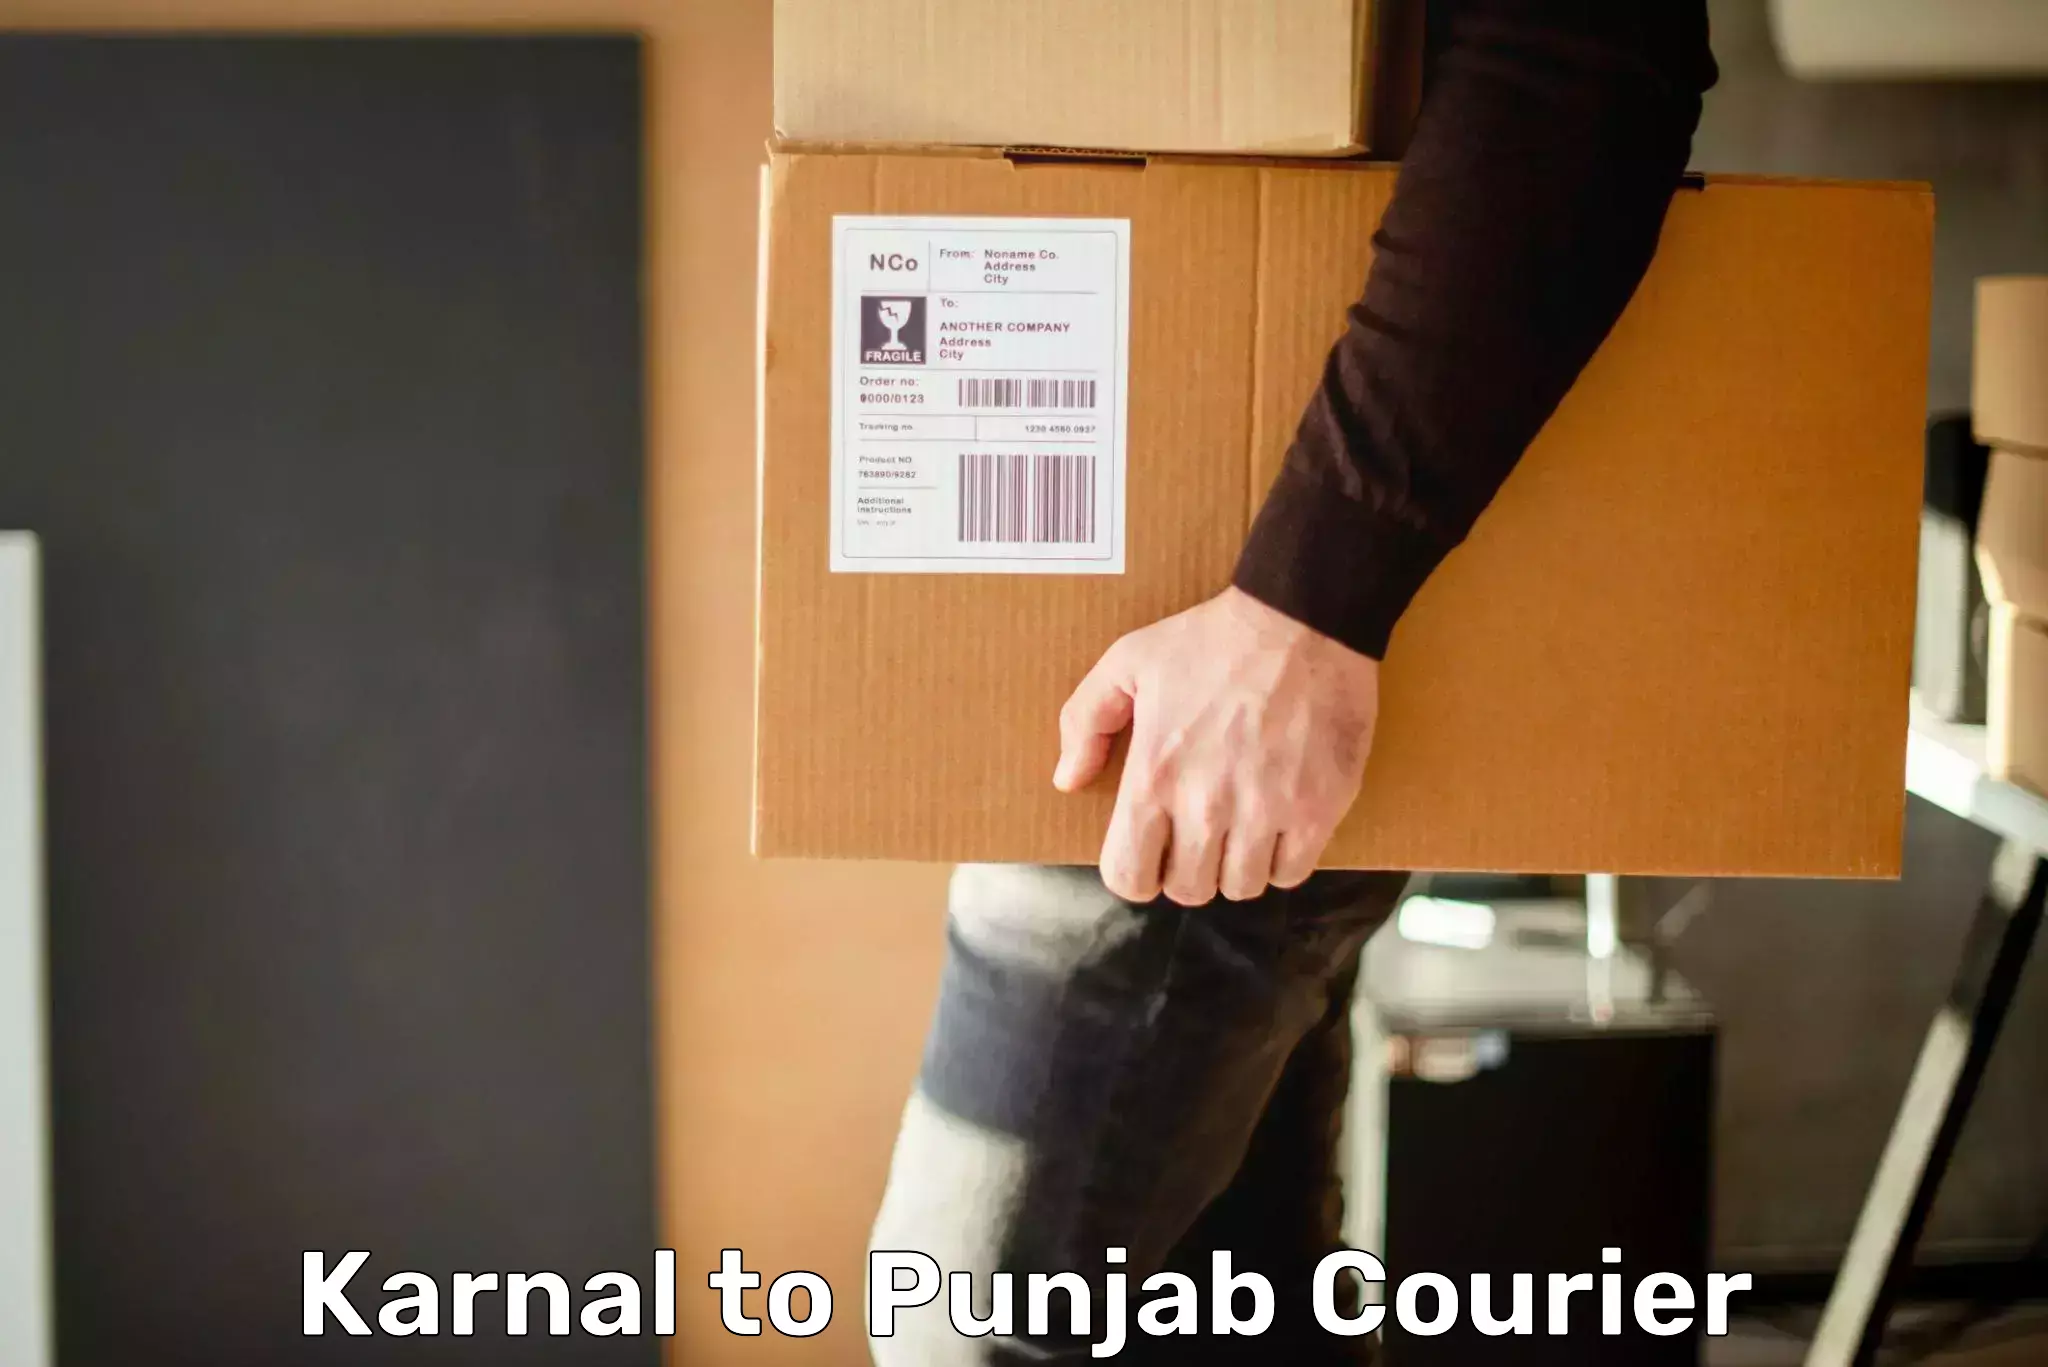 Courier service comparison Karnal to Dera Bassi